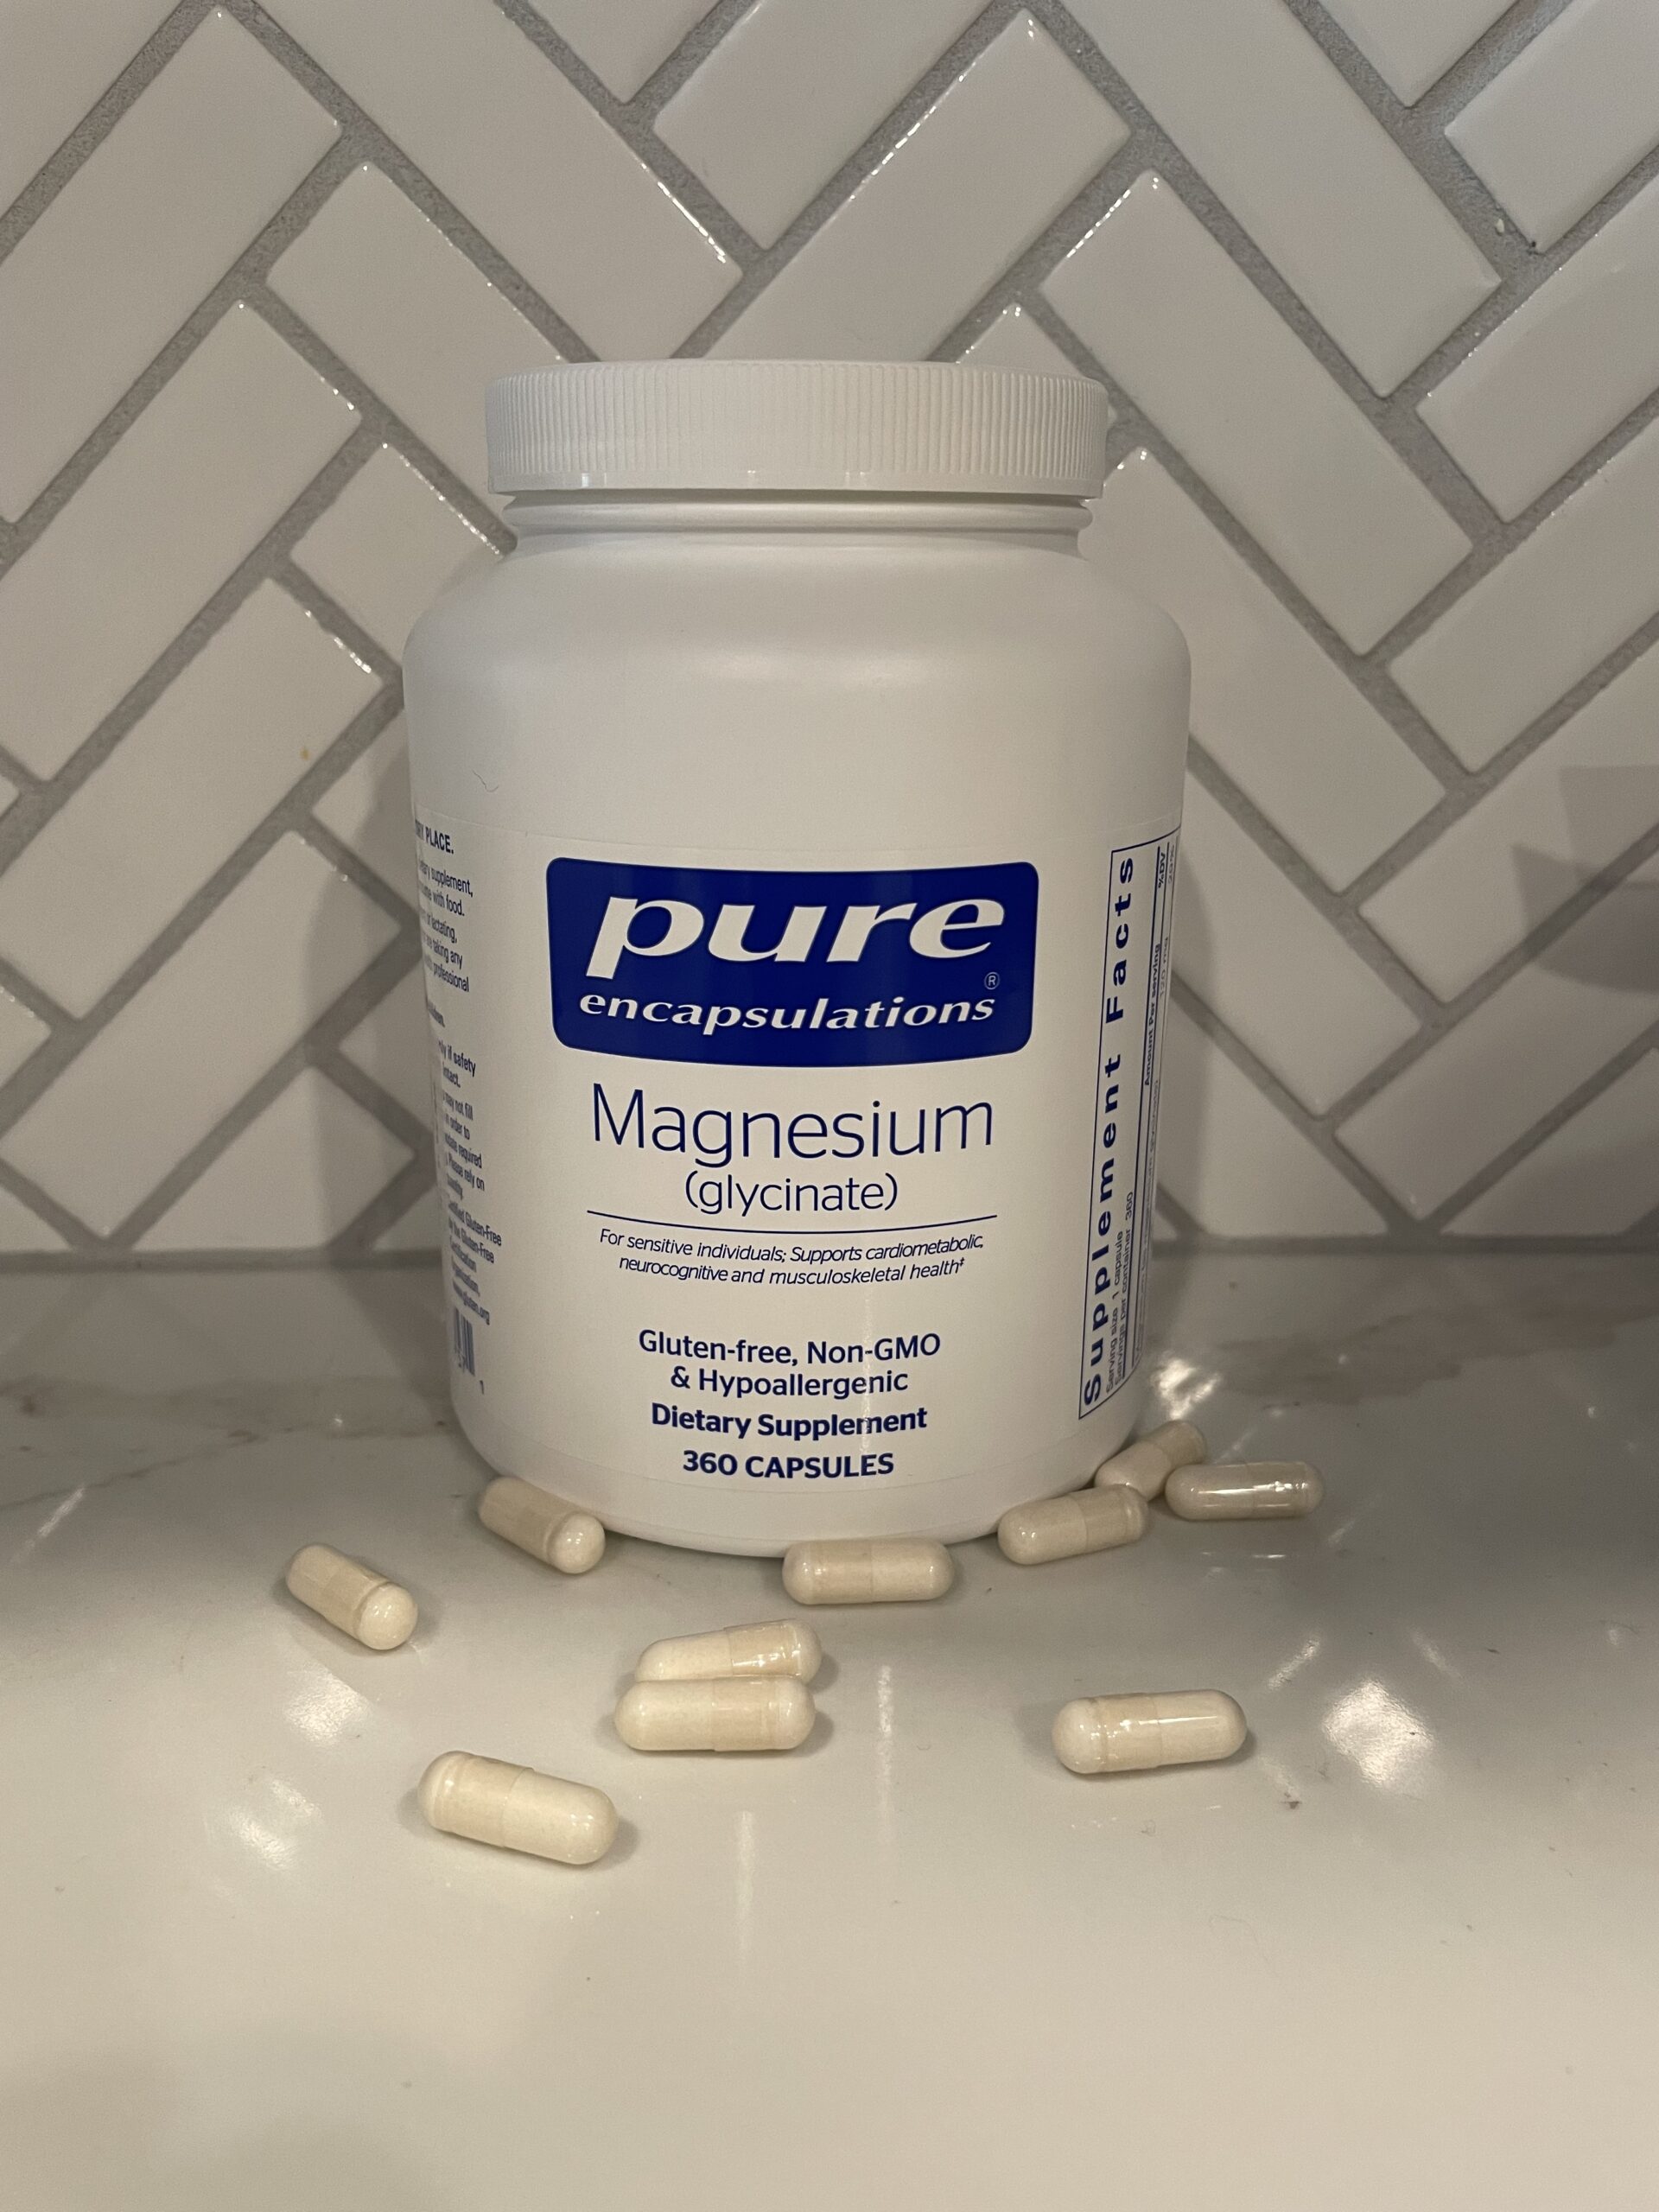 Pure Encapsulations Magnesium Glycinate Review